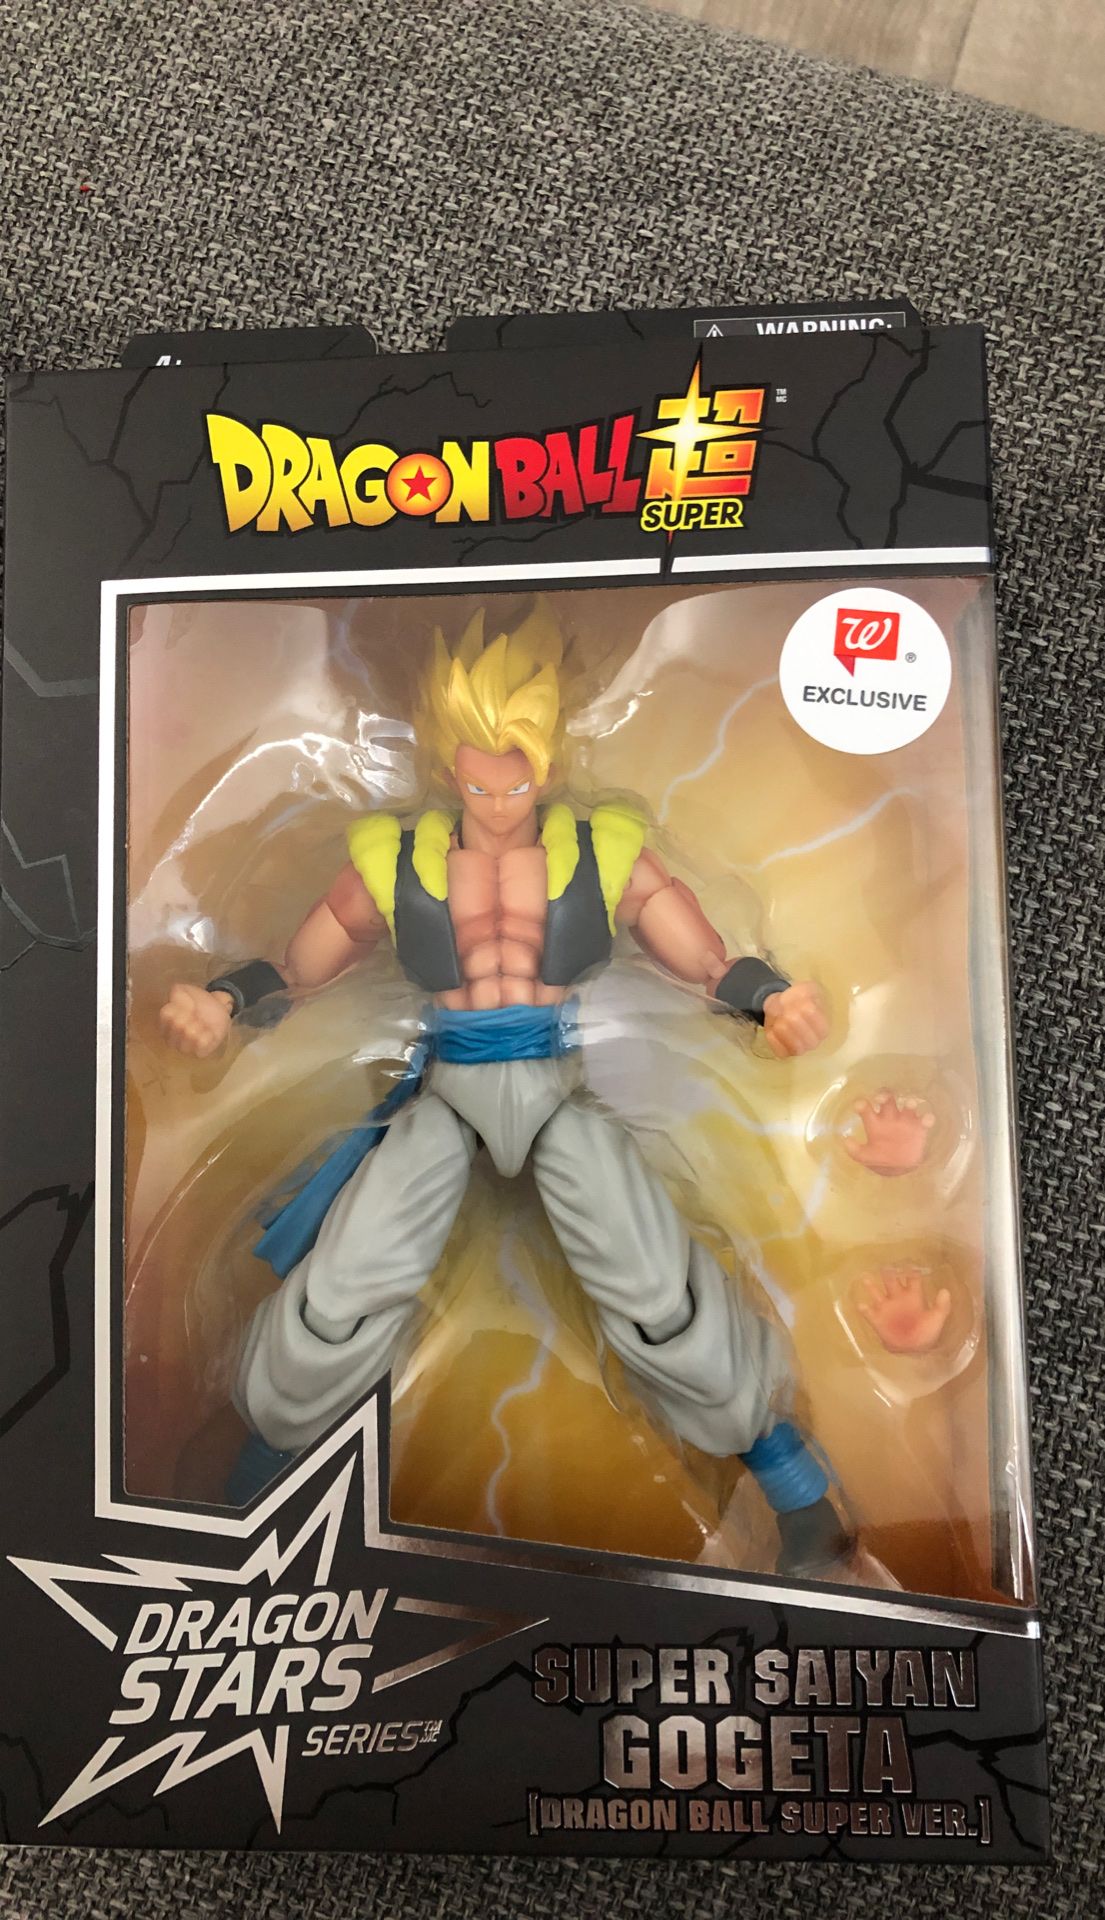 Dragonball Z Super Dragon Stars Super Saiyan Gogeta Figure Walgreens Exclusive